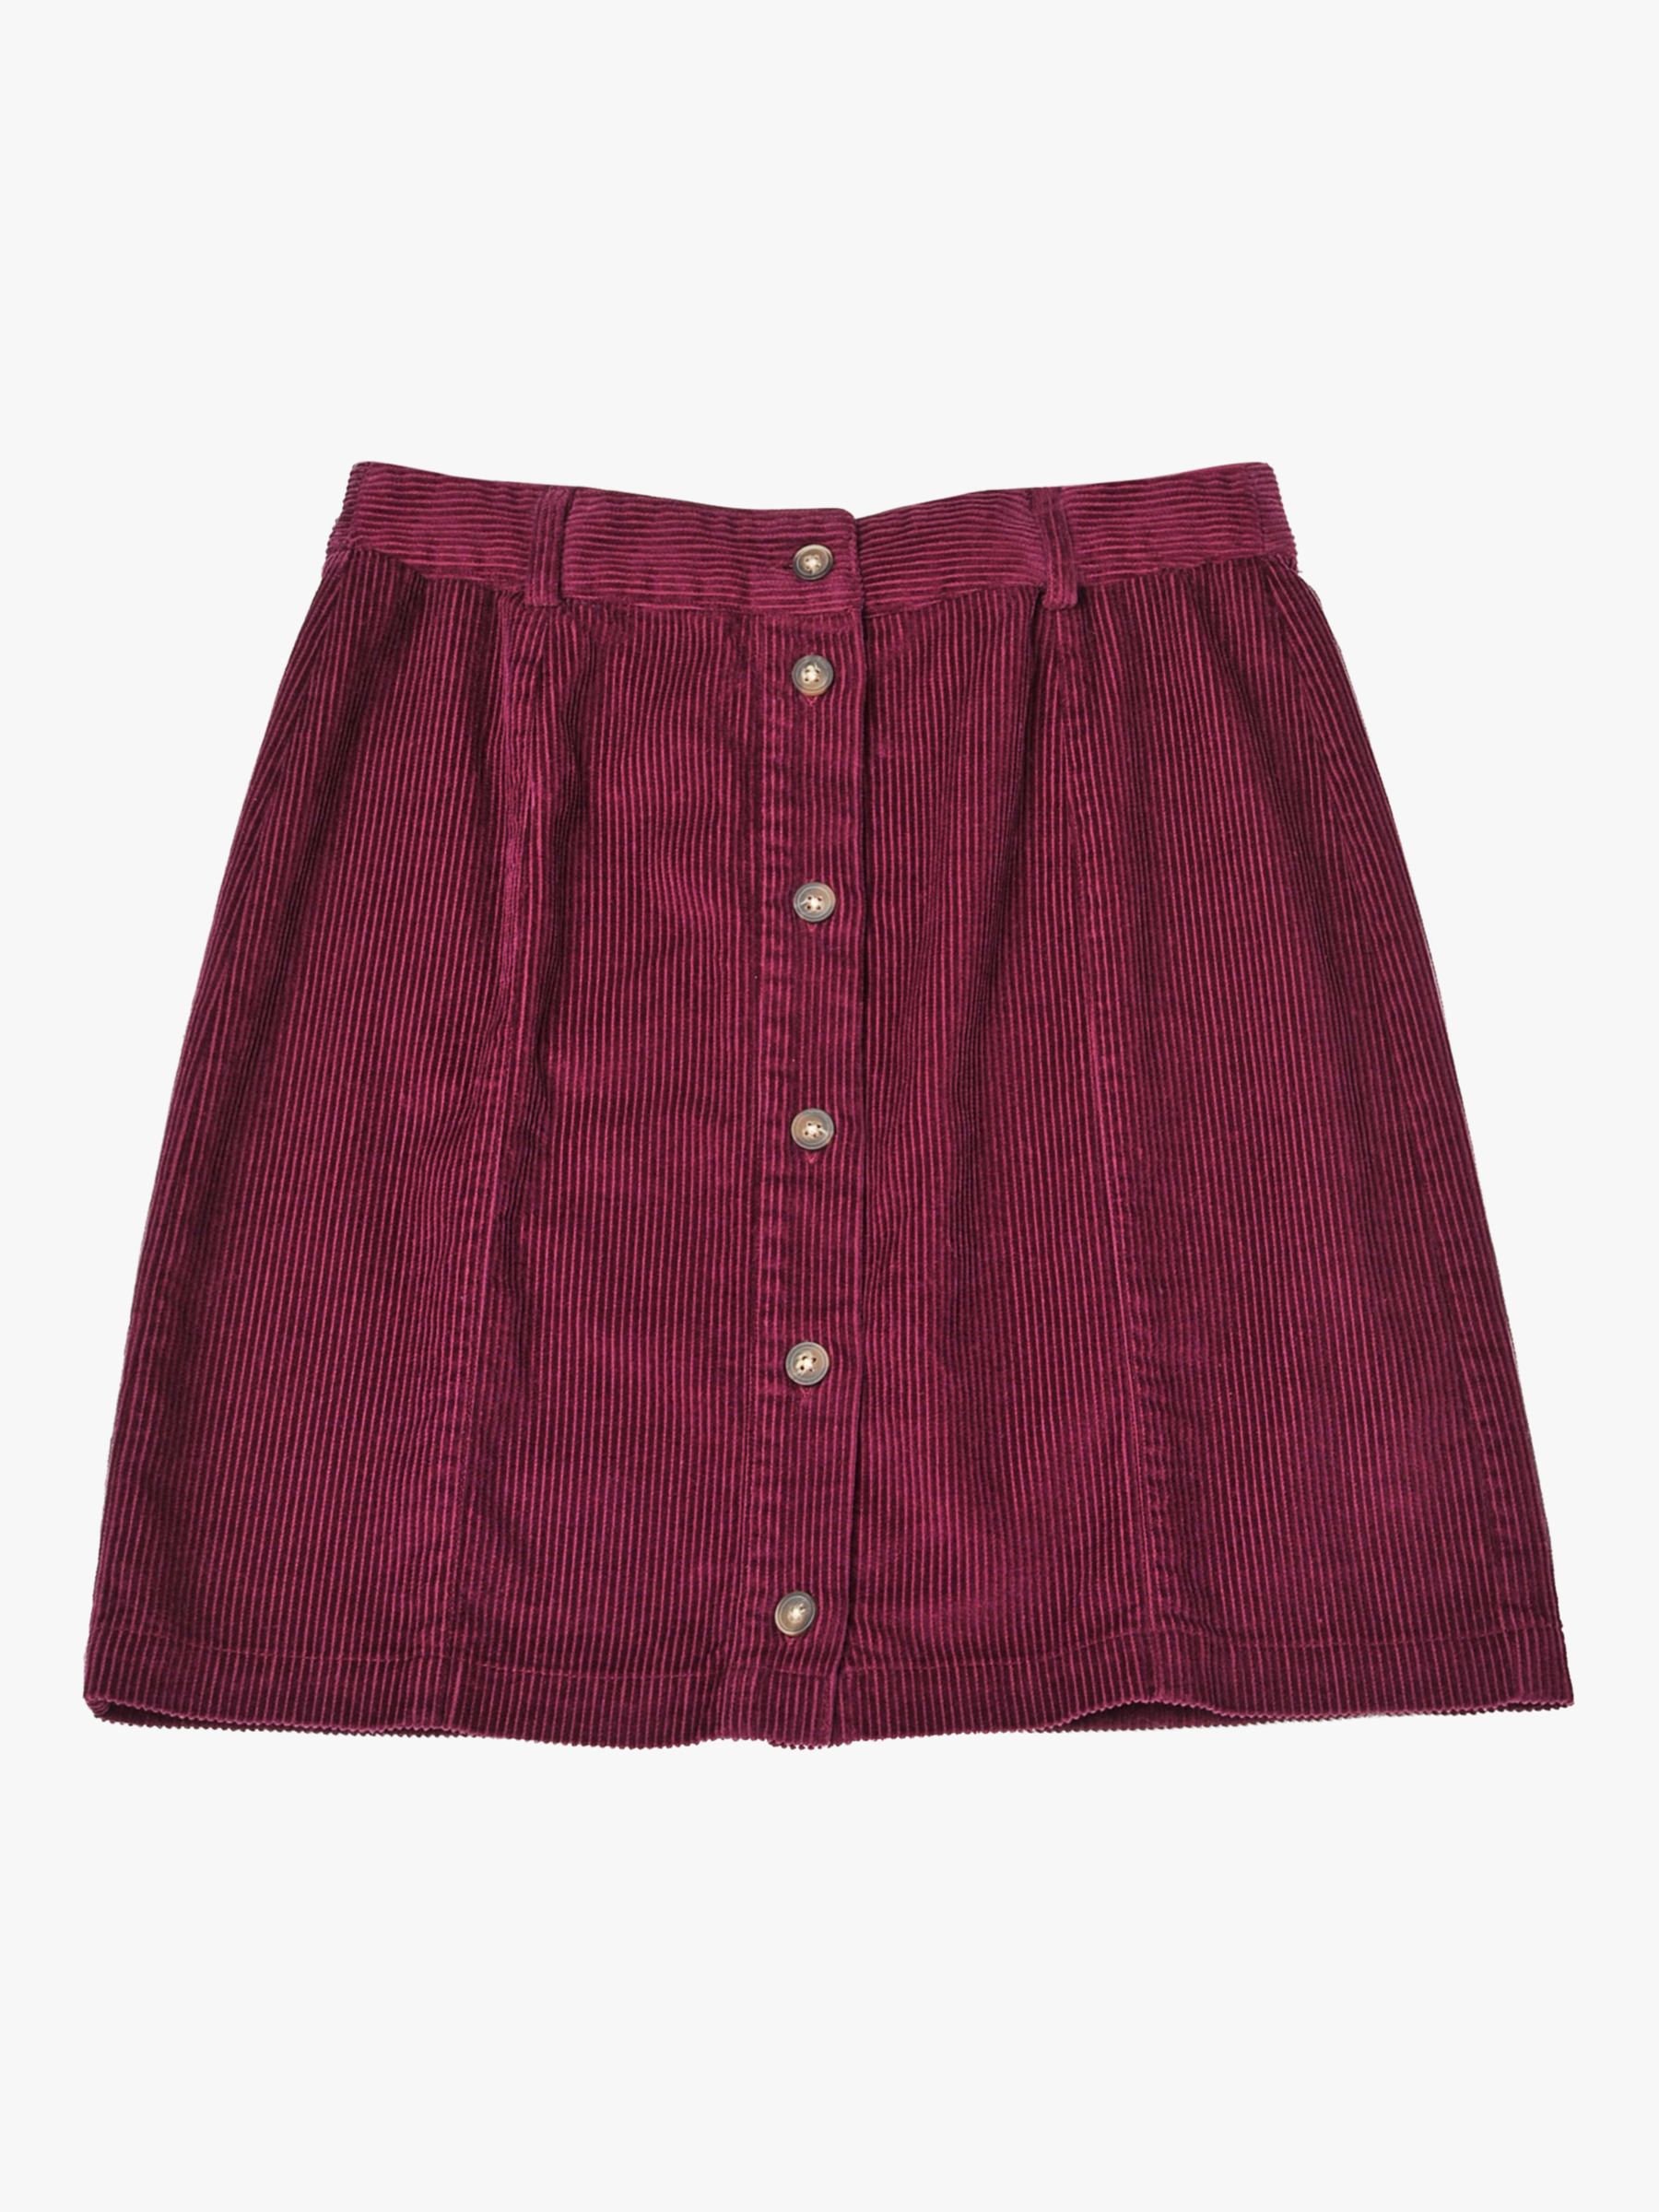 Buy Burgs Penberth Corduroy Skirt Online at johnlewis.com